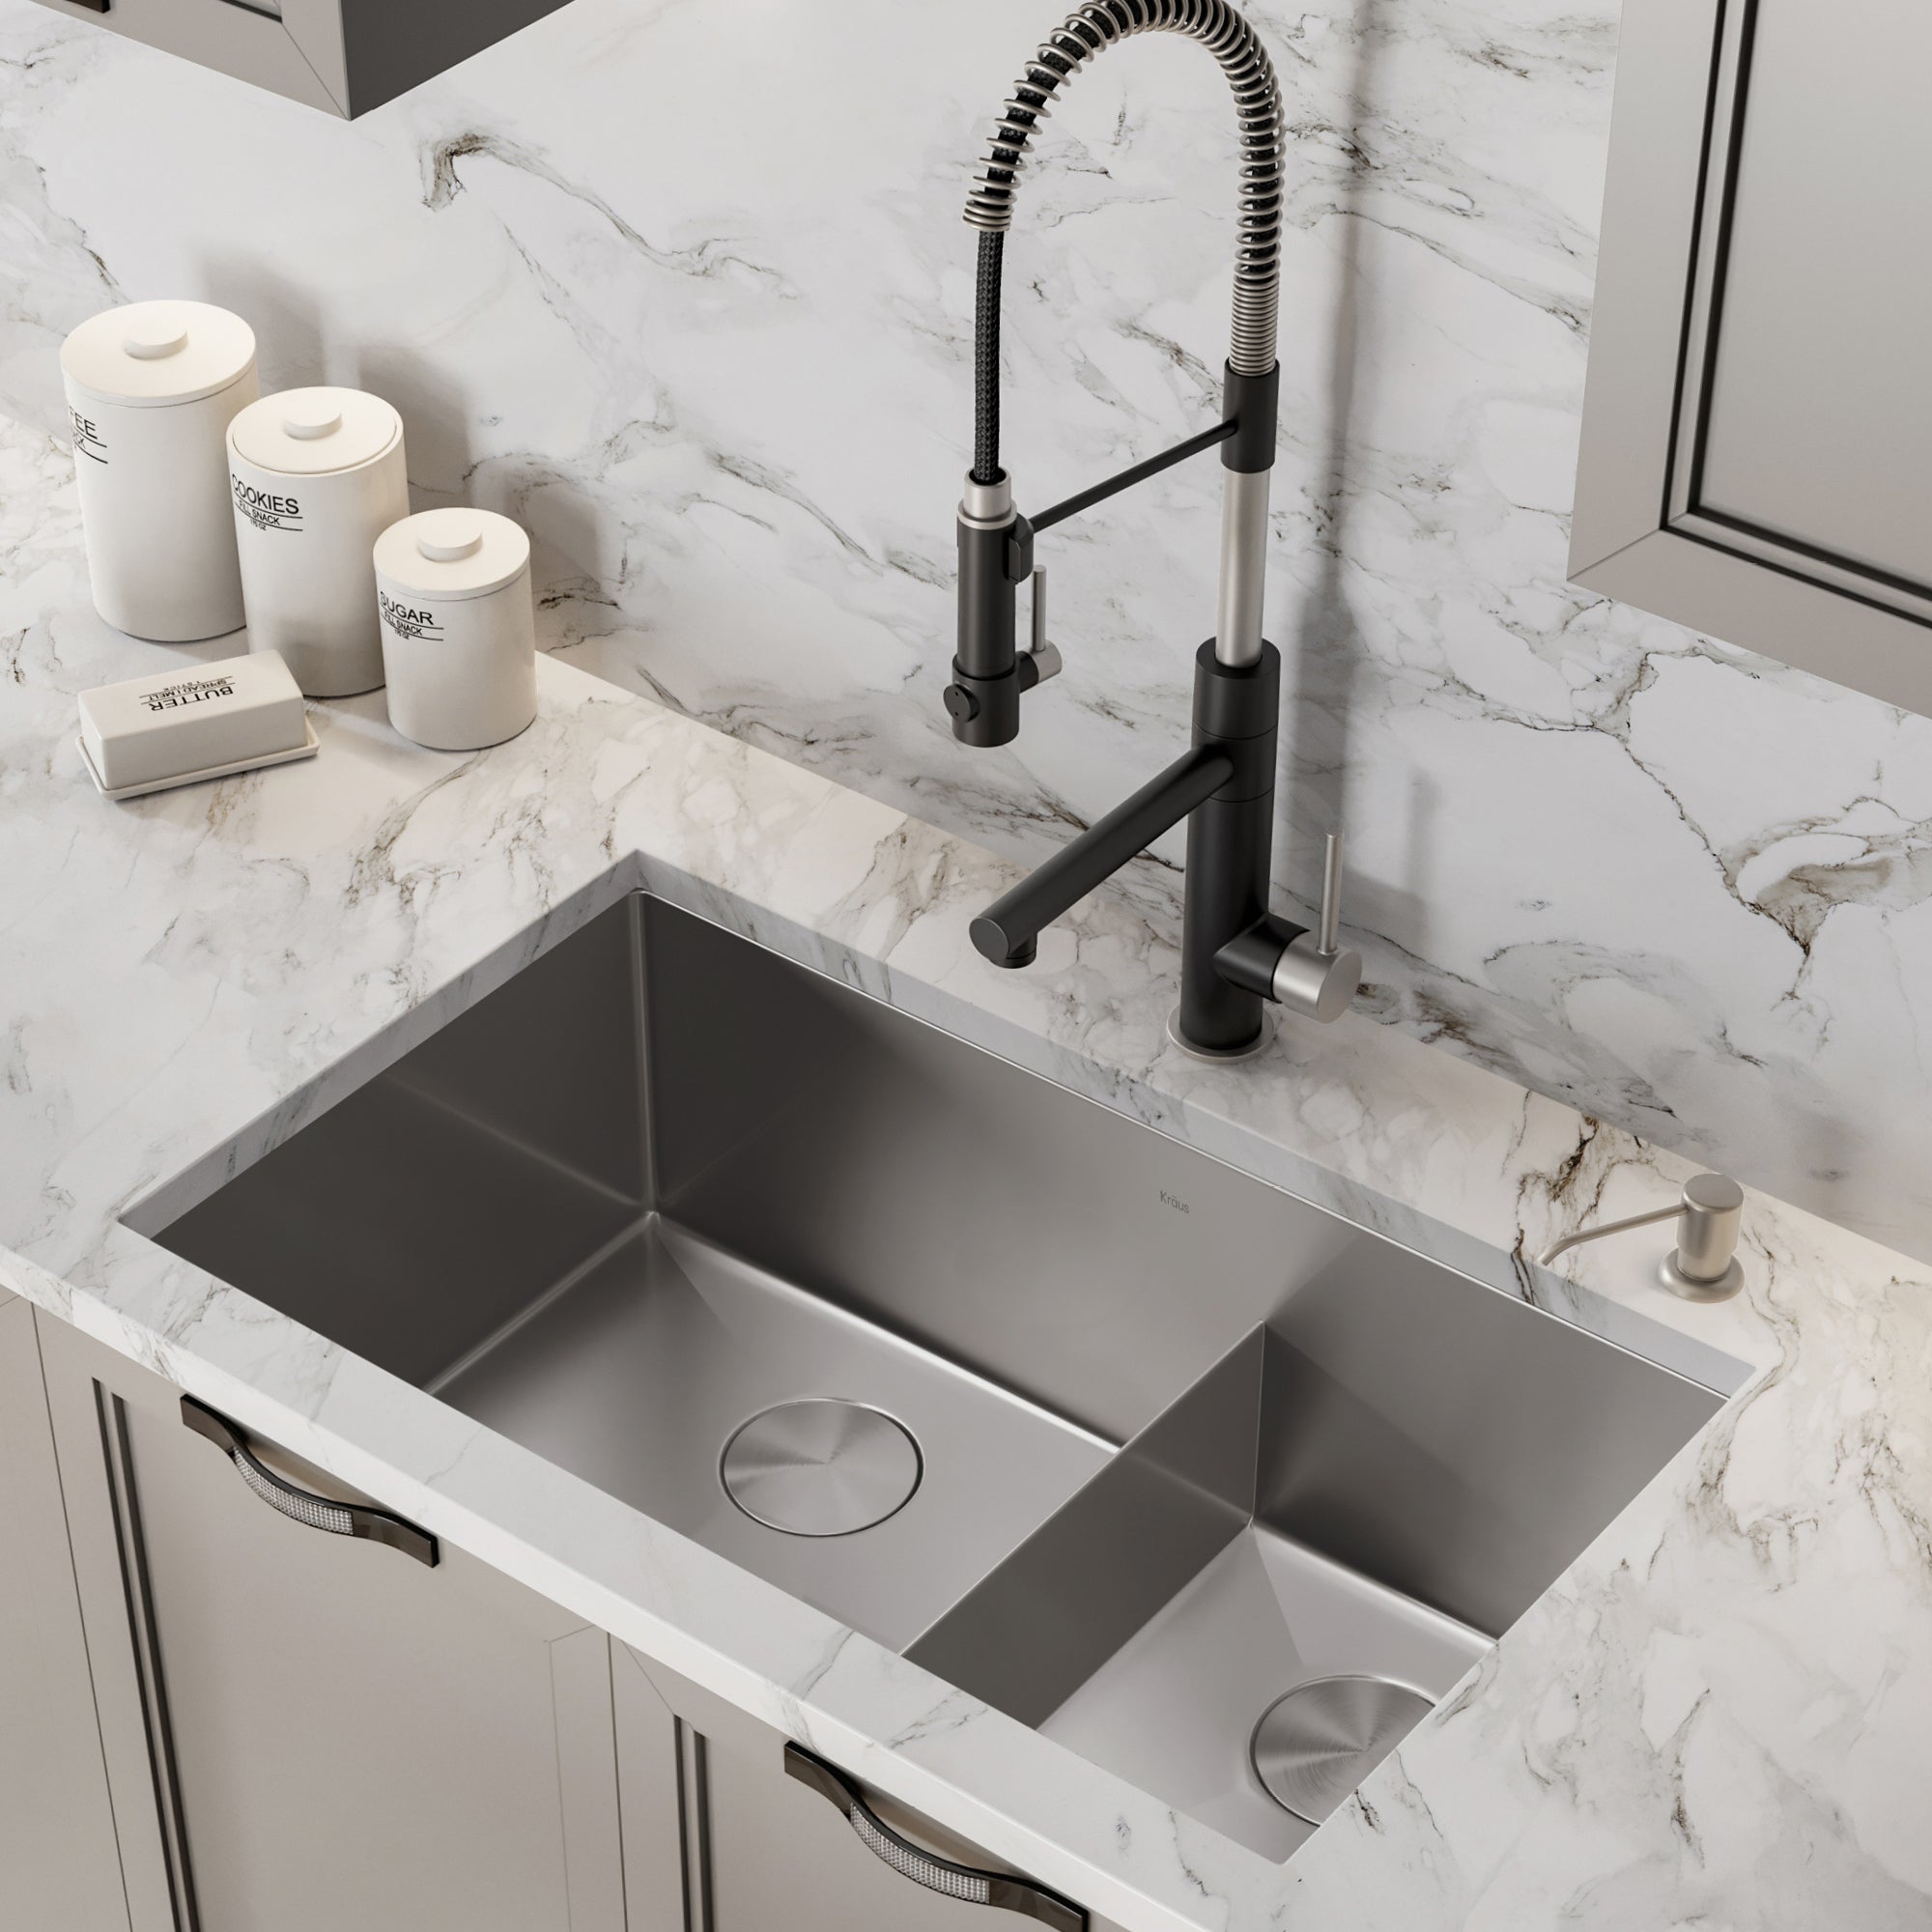 KRAUS Low Divide Double Bowl 32 Undermount Kitchen Sink — DirectSinks